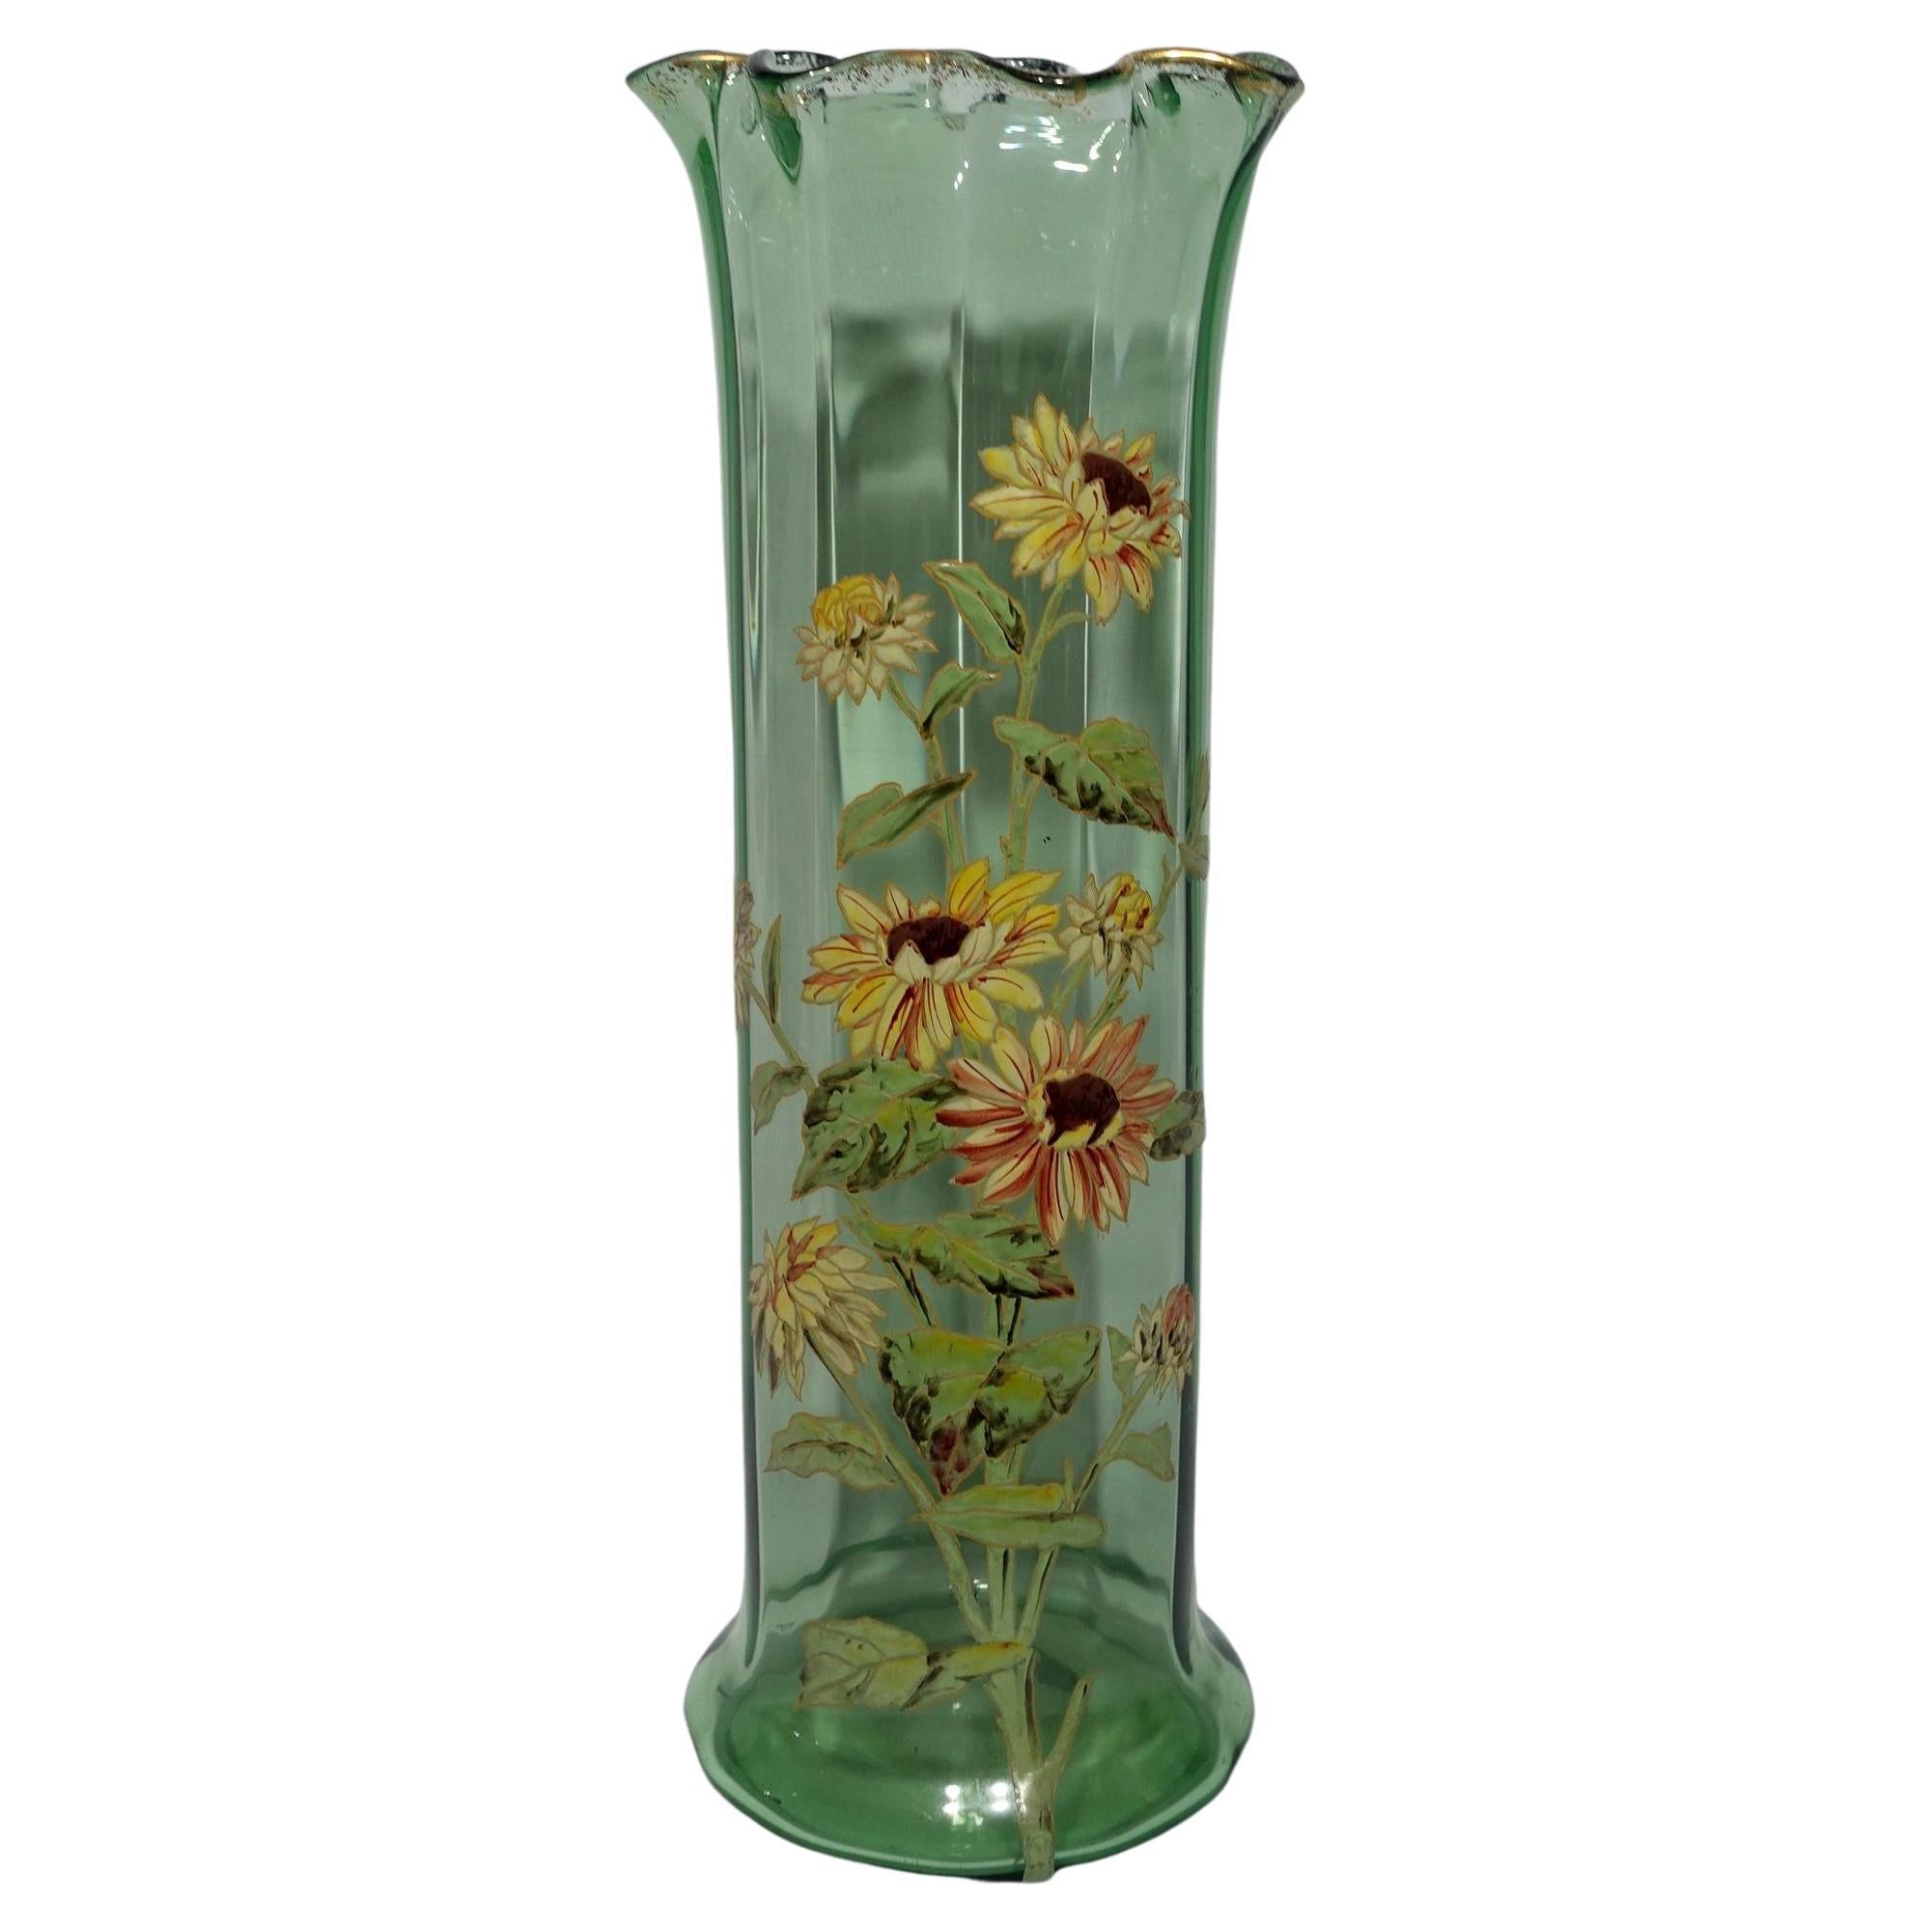 Antique A Large Green Mont Joye Enamel art glass Vase